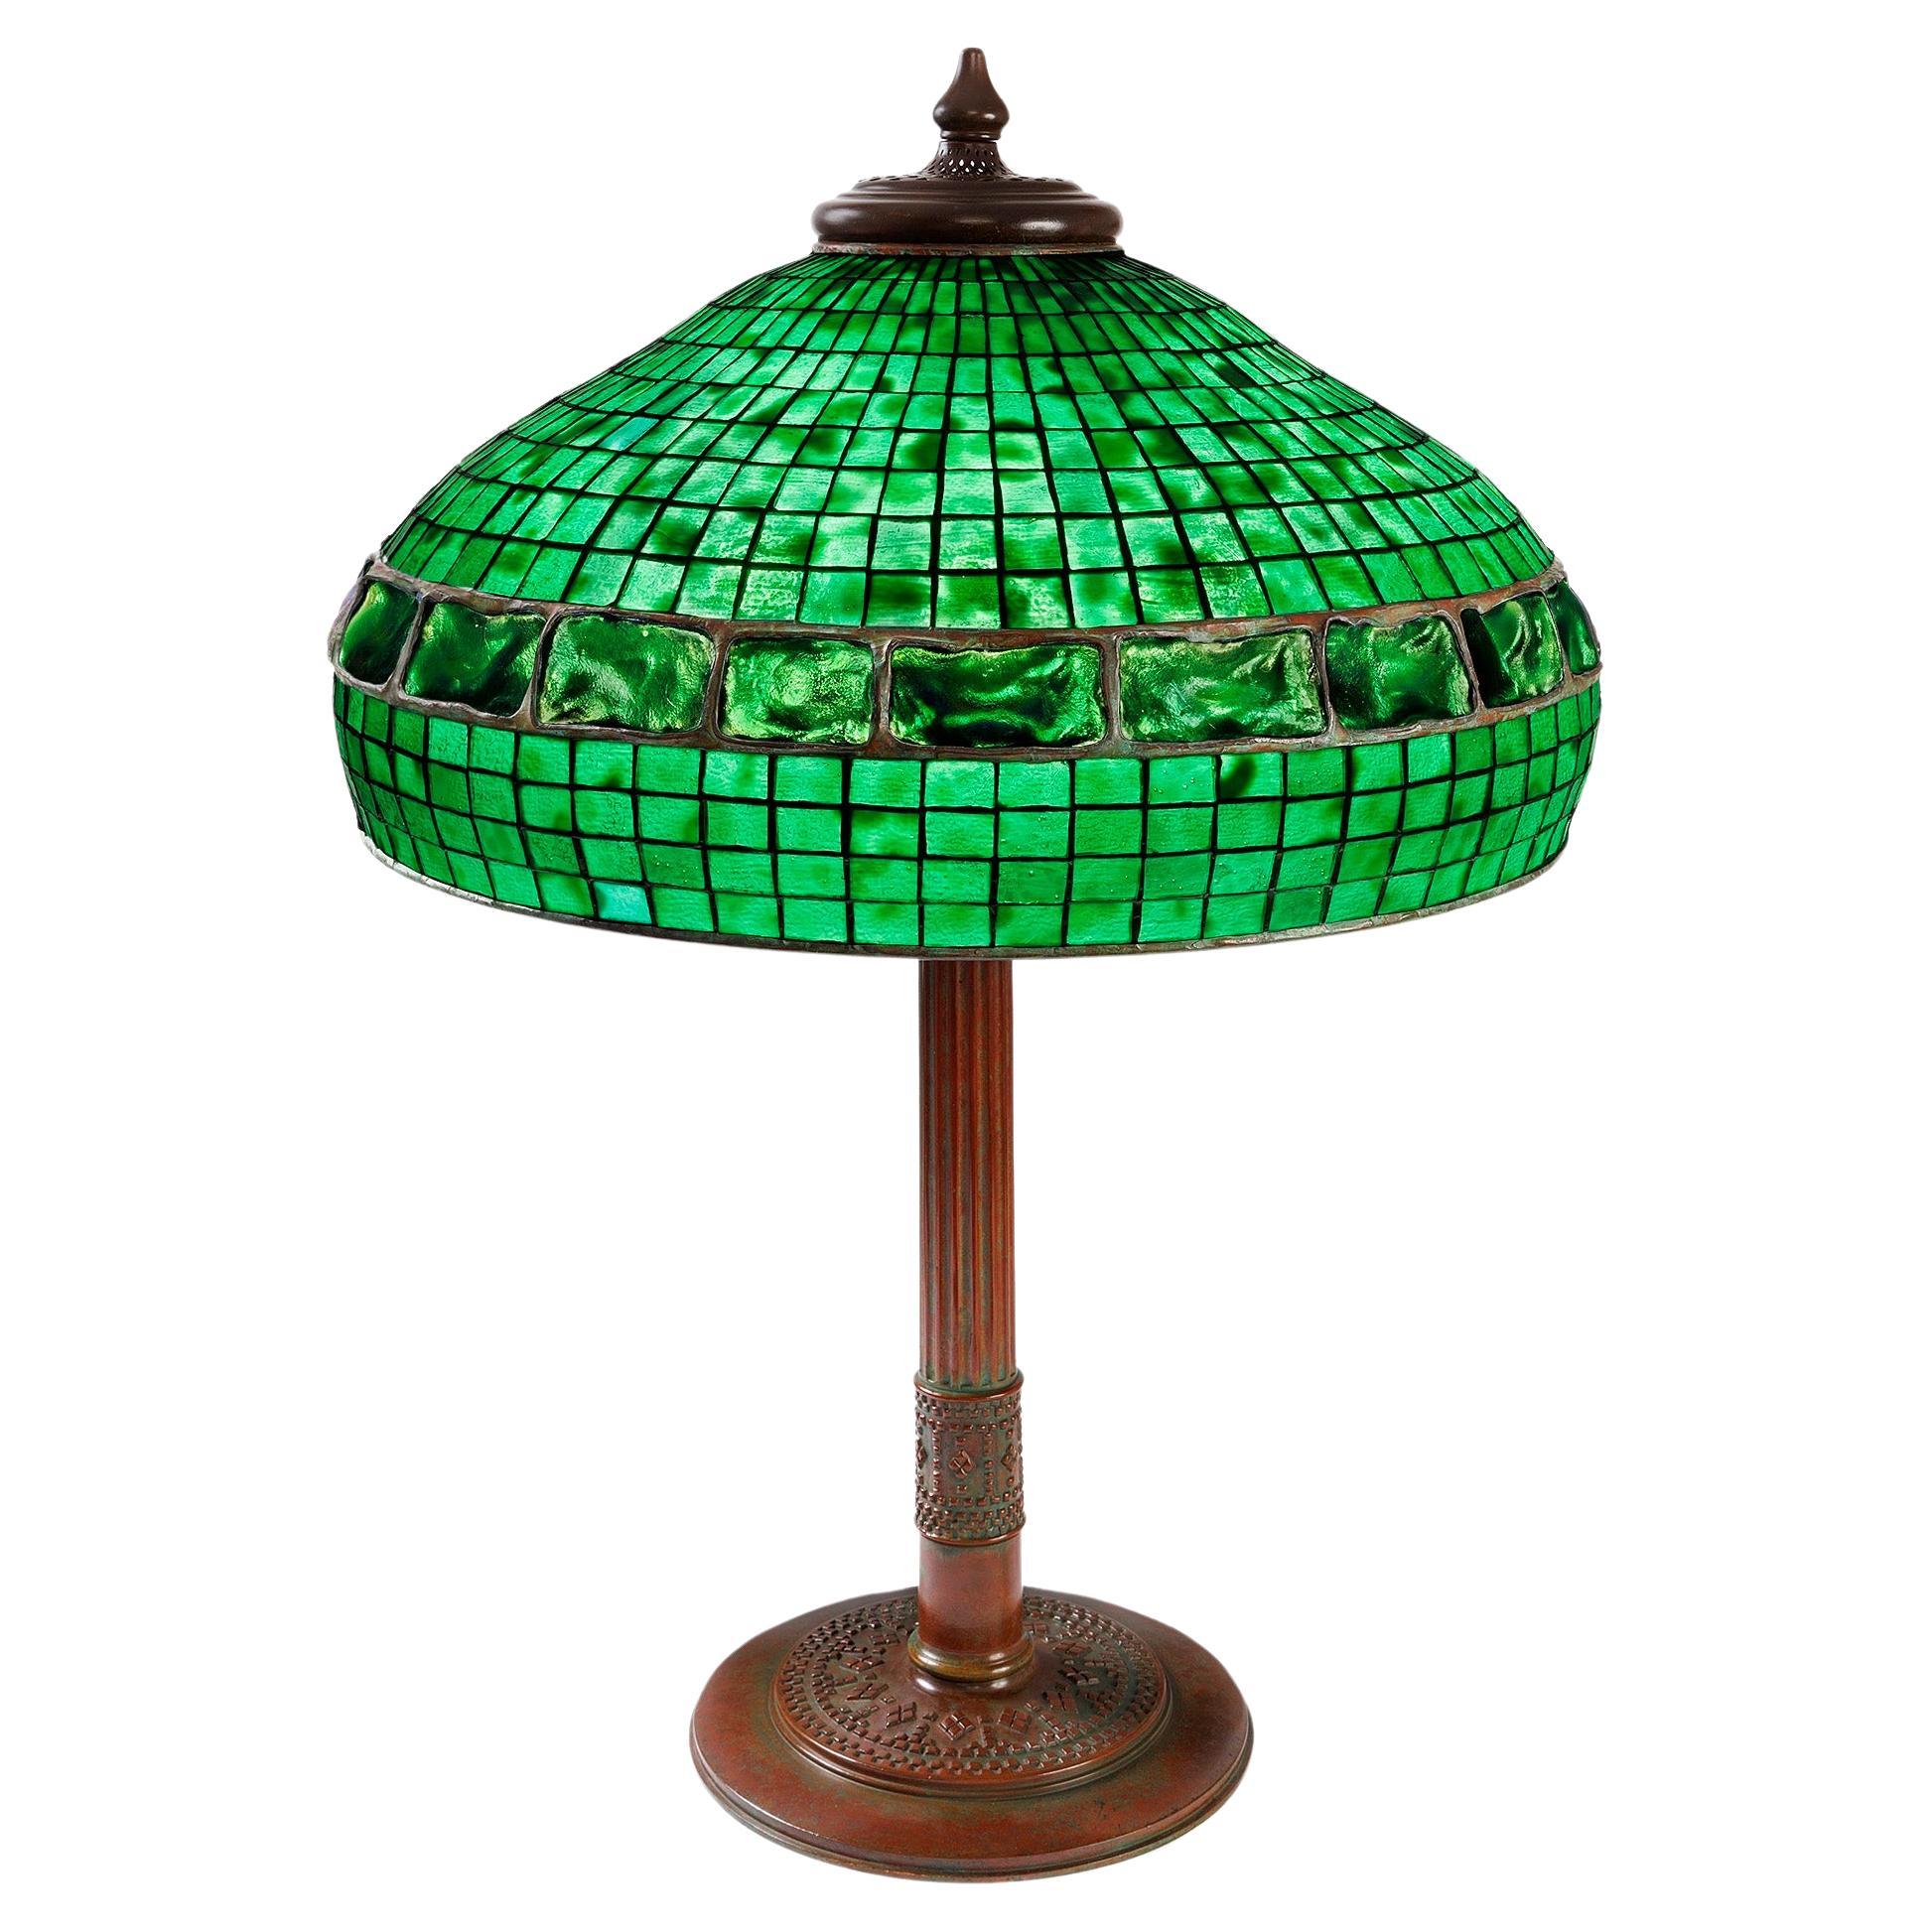 Tiffany Studios New York "Belted Turtleback" Table Lamp